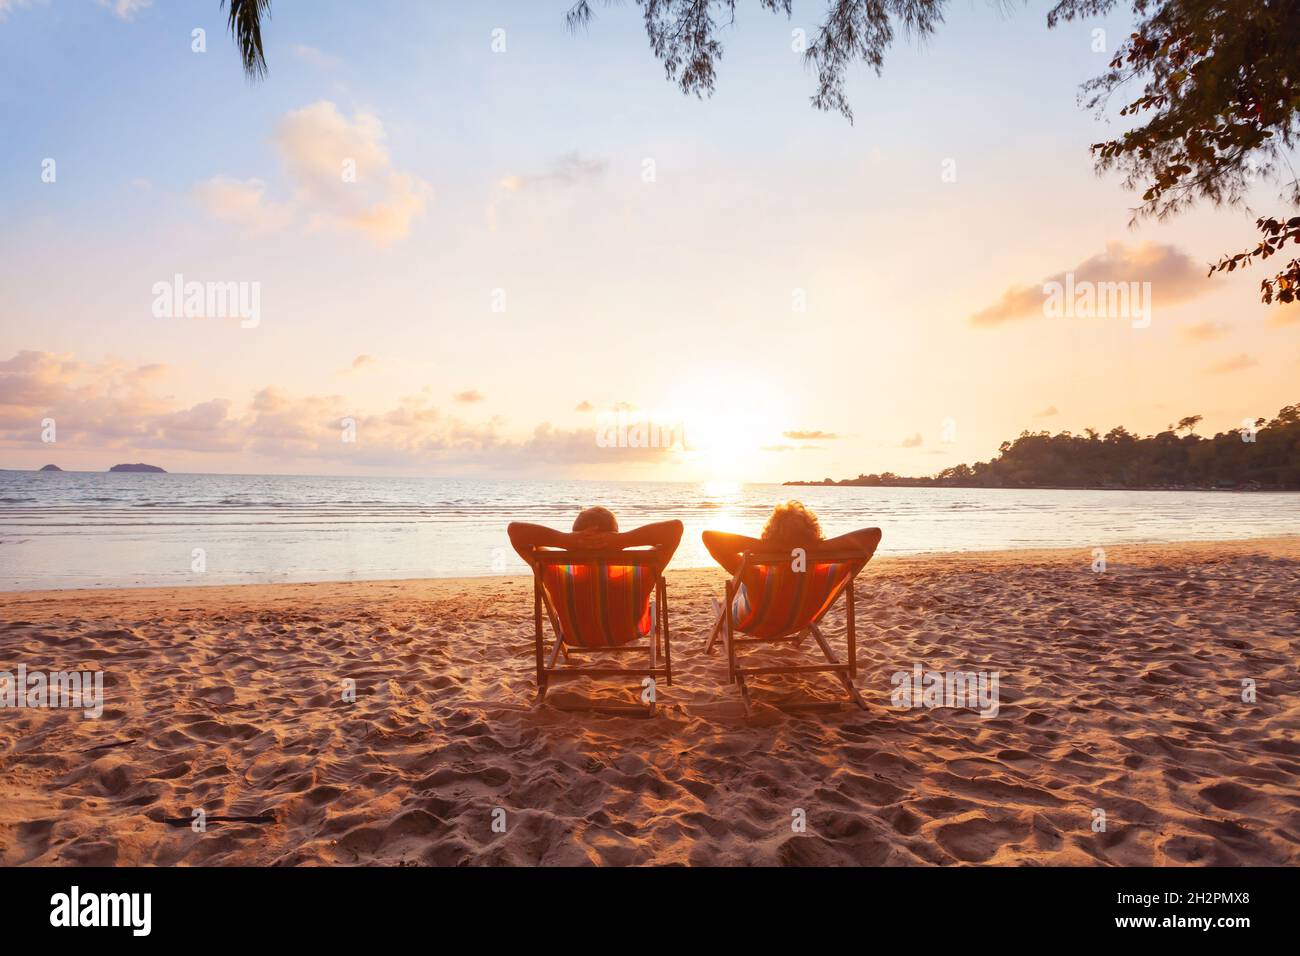 romantic getaway for couple, beach honeymoon travel, silhouettes